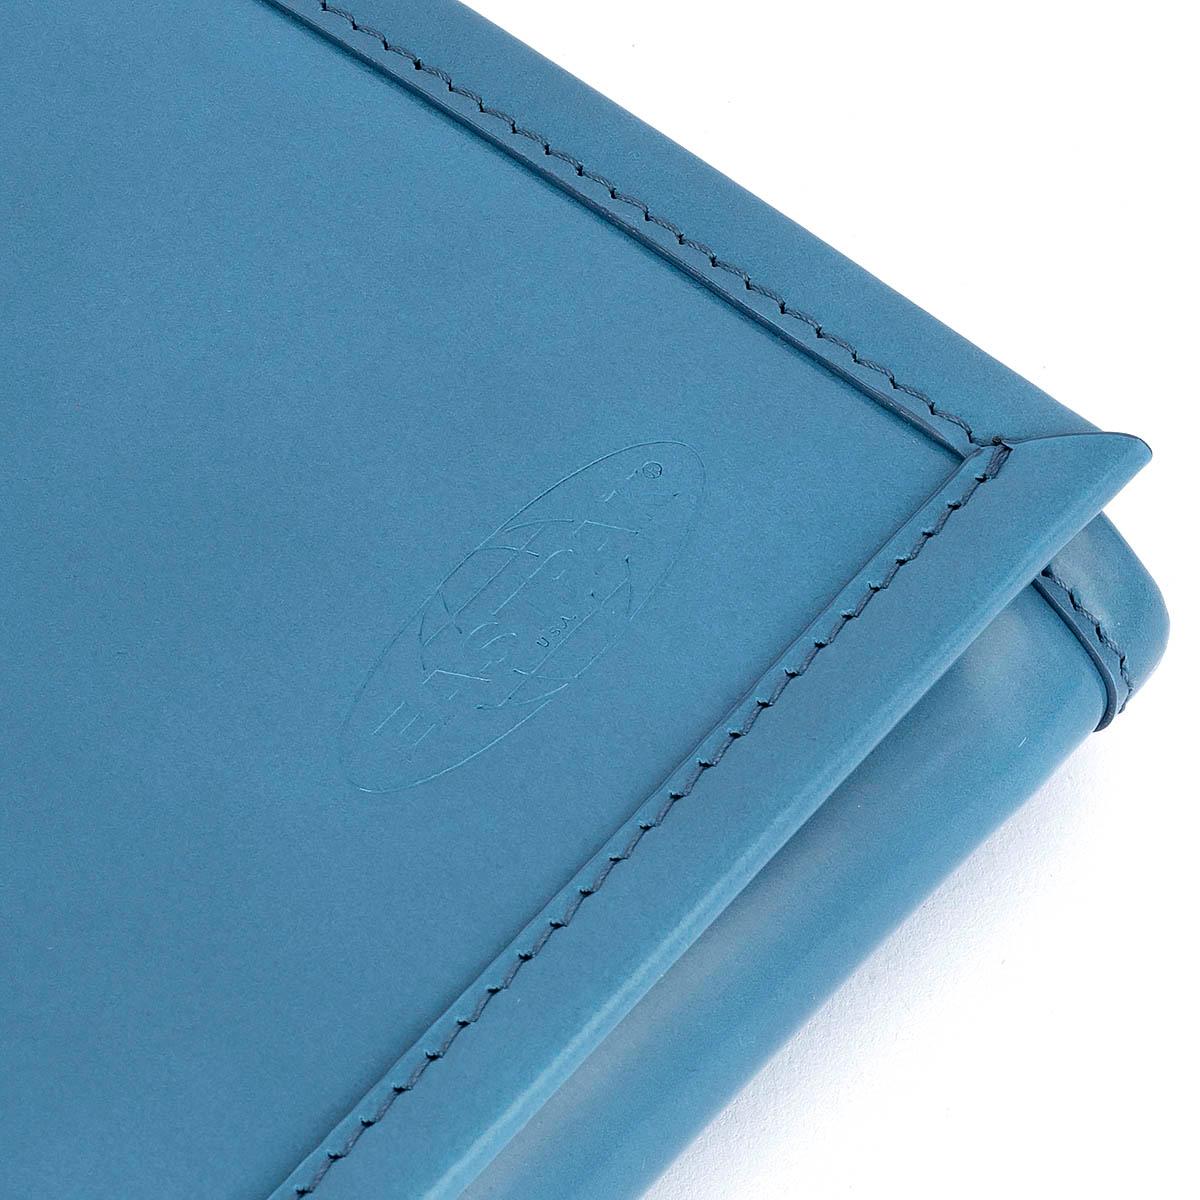 VETEMENTS x EASTPAK blue leather 2017 CHAIN Clutch Bag For Sale 4